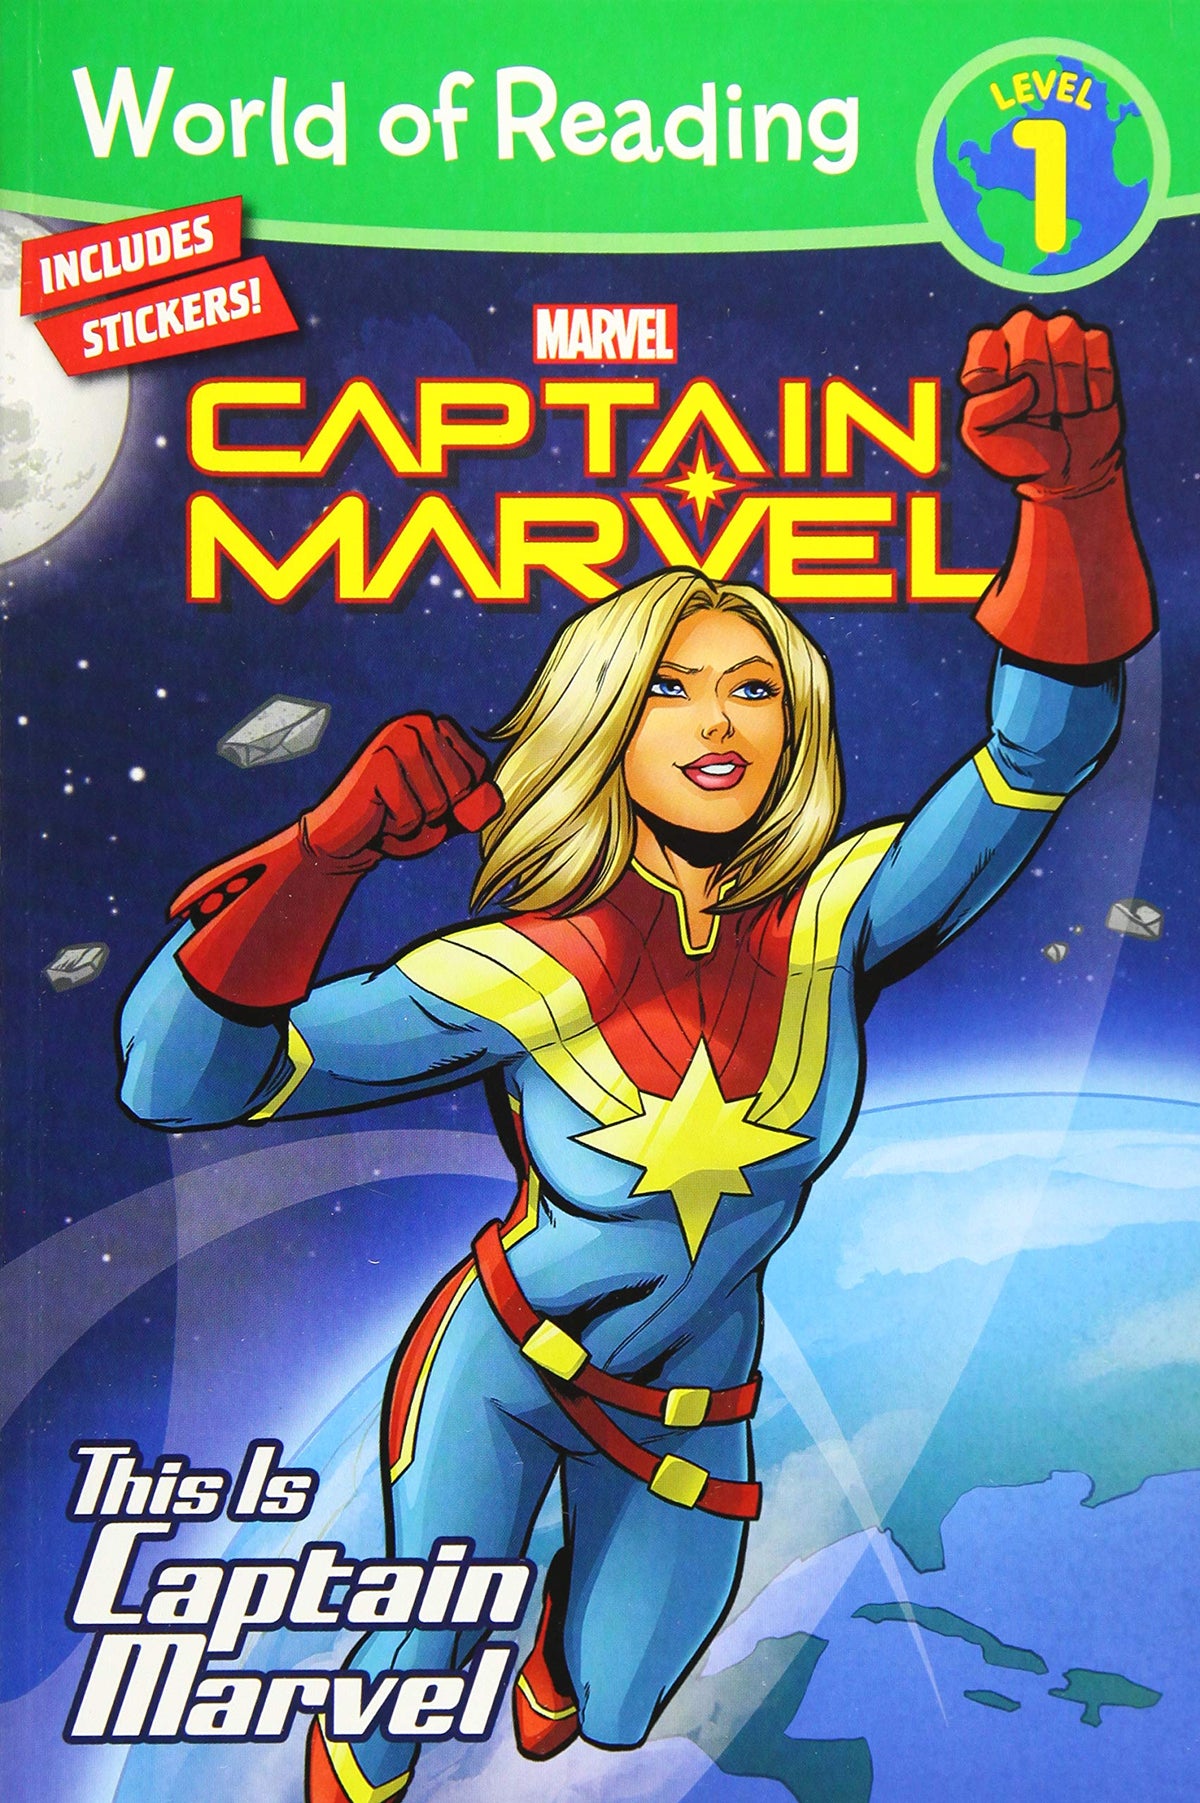 World of Reading Level 1: Captain Marvel - This is Captain Marvel - Third Eye